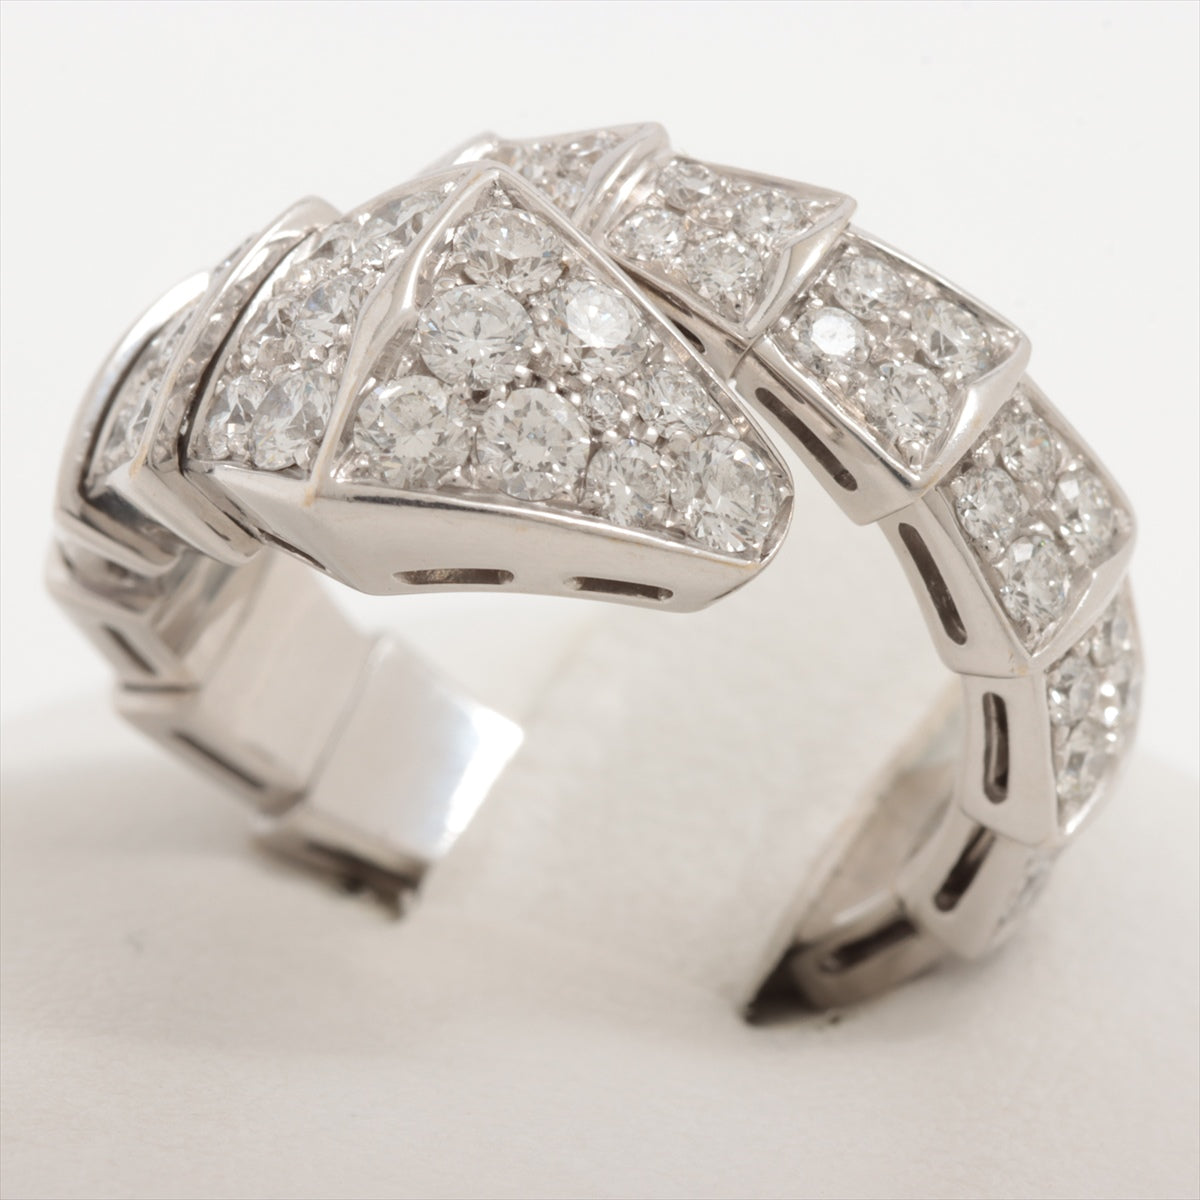 Bulgari Selpenti Viper Diamond Ring 750 (WG) 8.6g